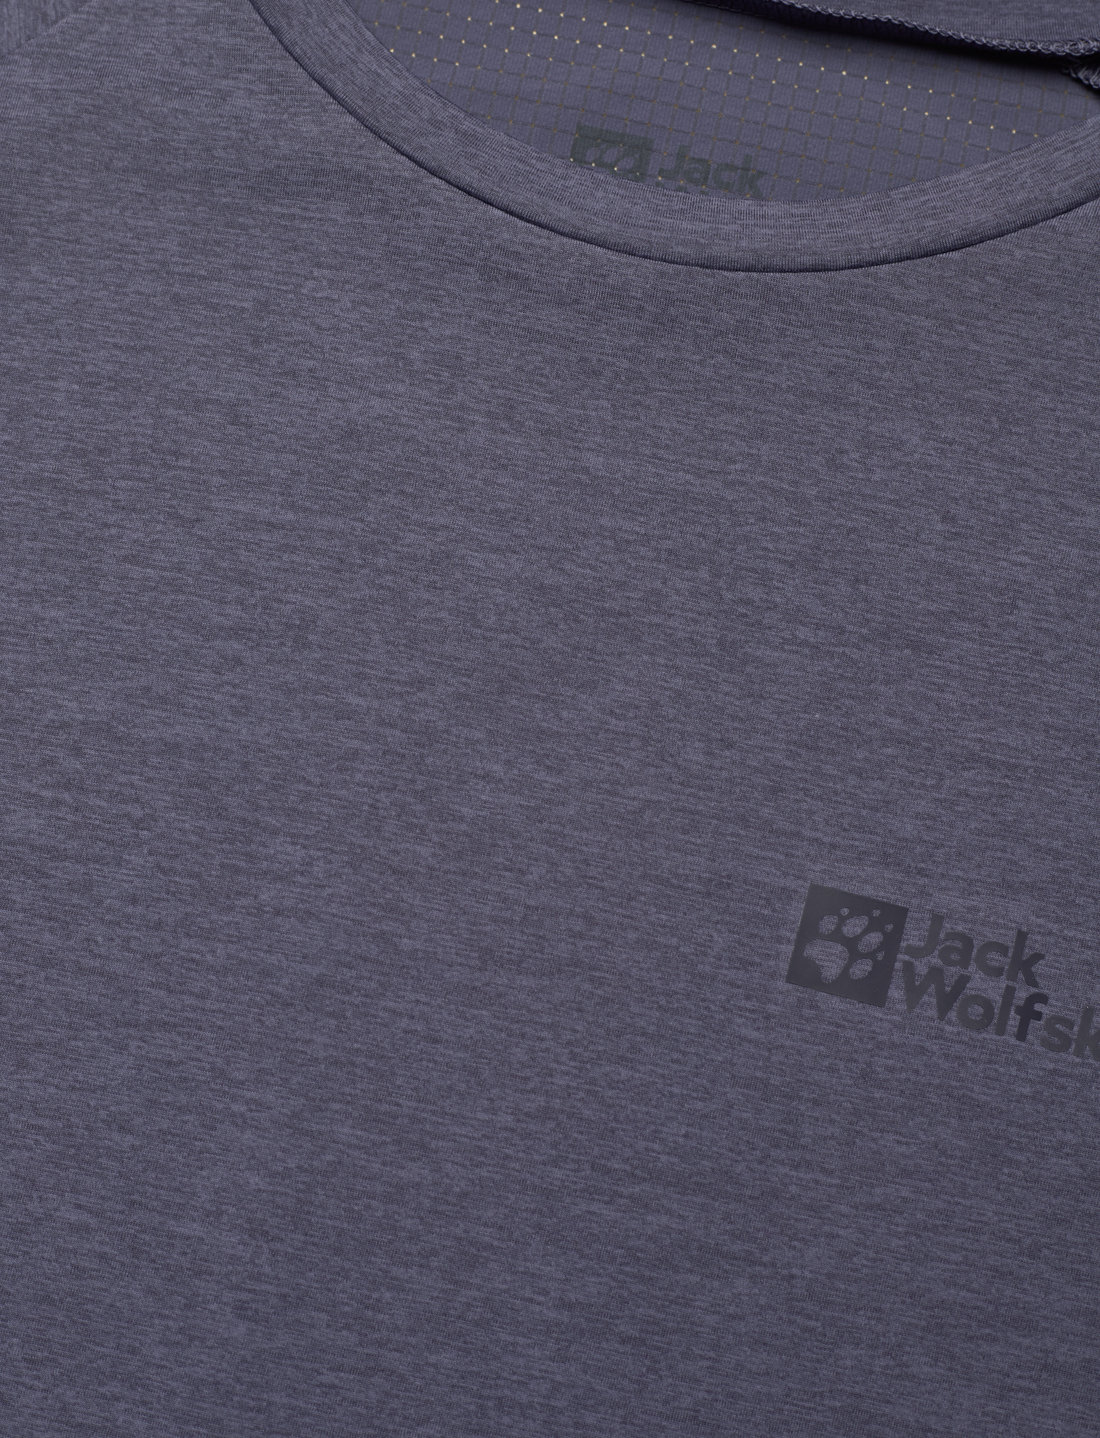 Jack Wolfskin Prelight Pro T W - T-shirts